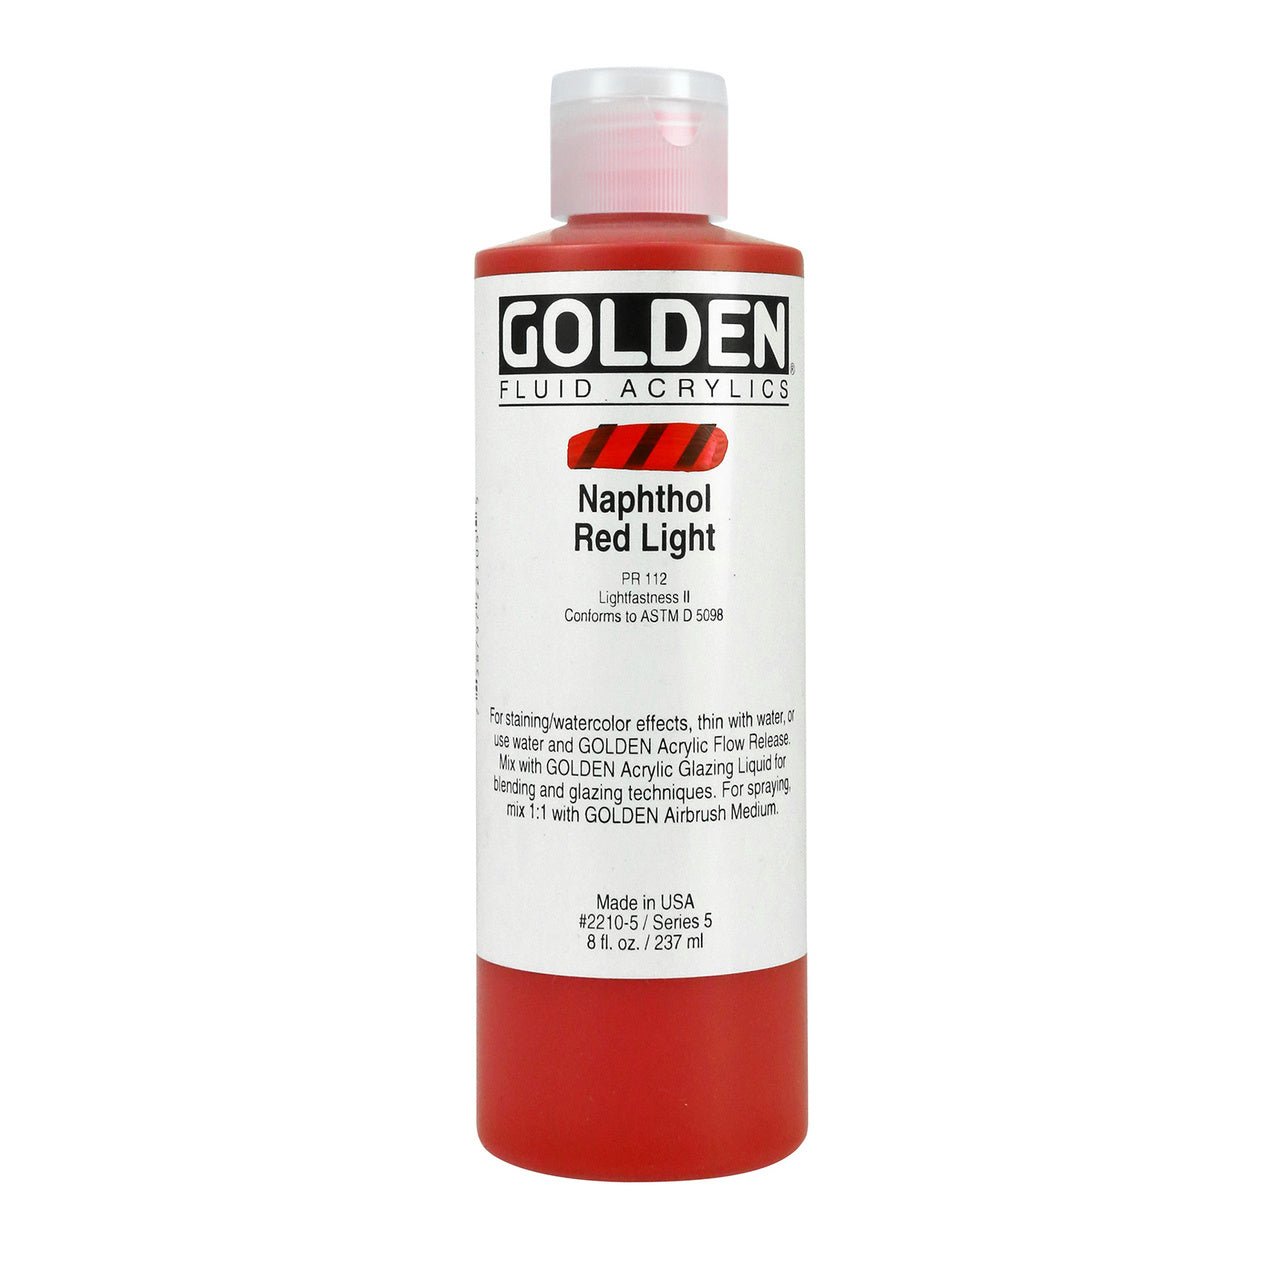 Golden Fluid Acrylic Naphthol Red Light 8 oz - merriartist.com